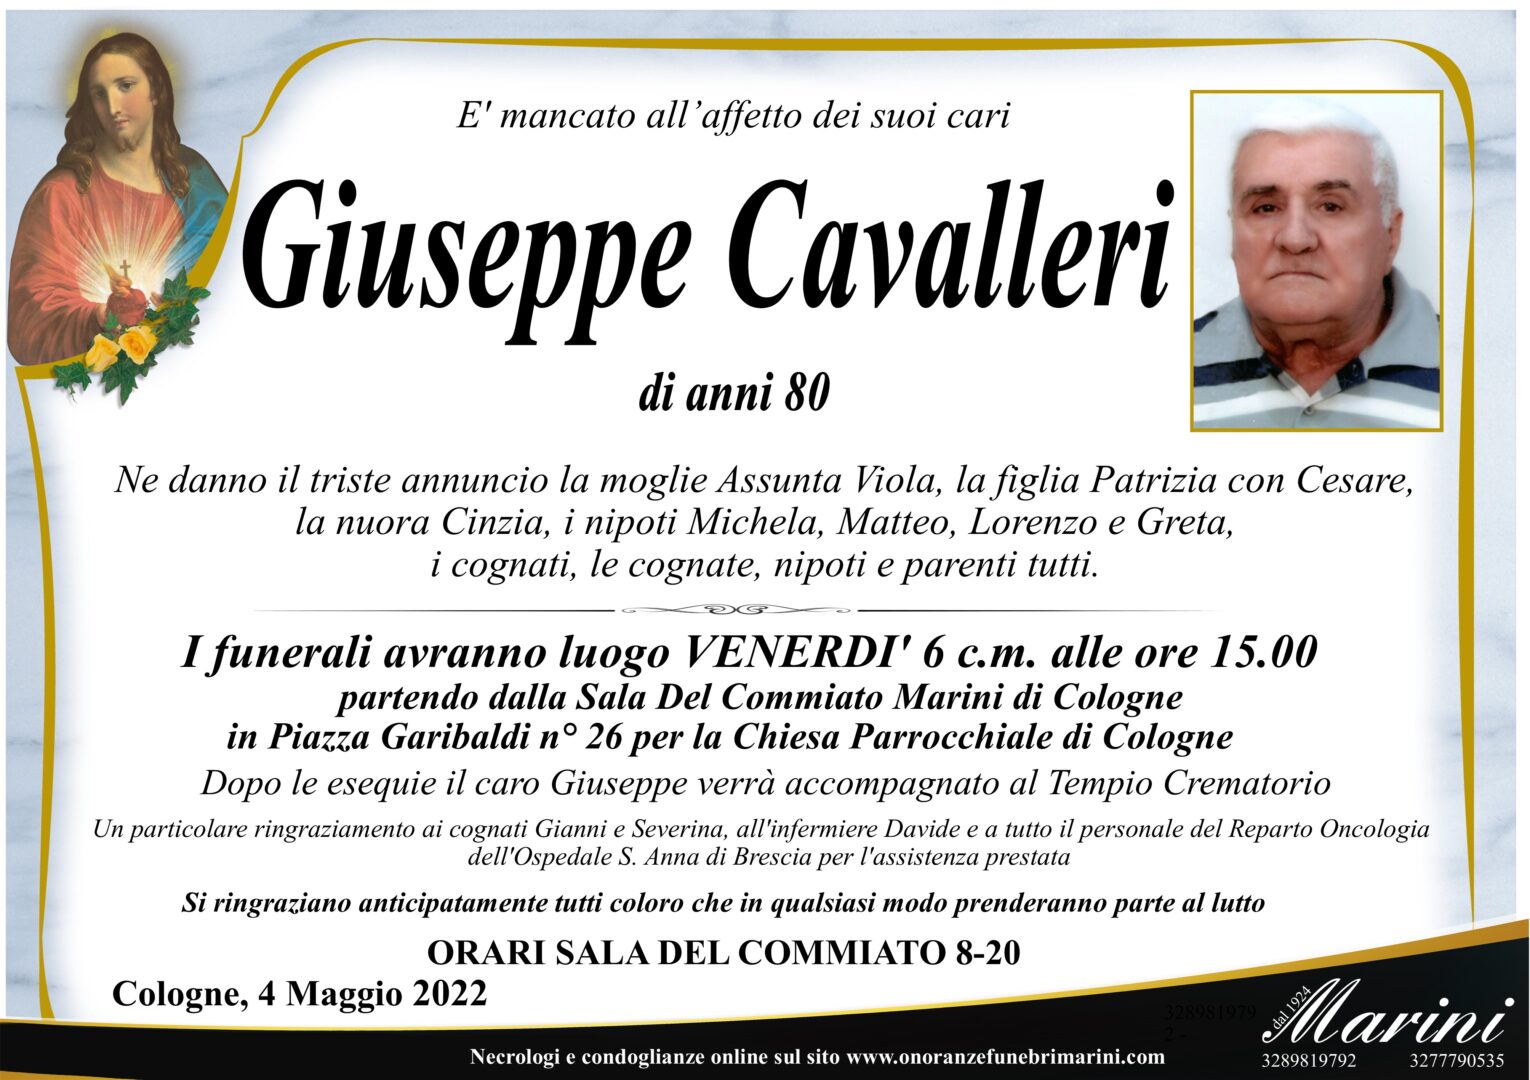 Giuseppe Cavalleri